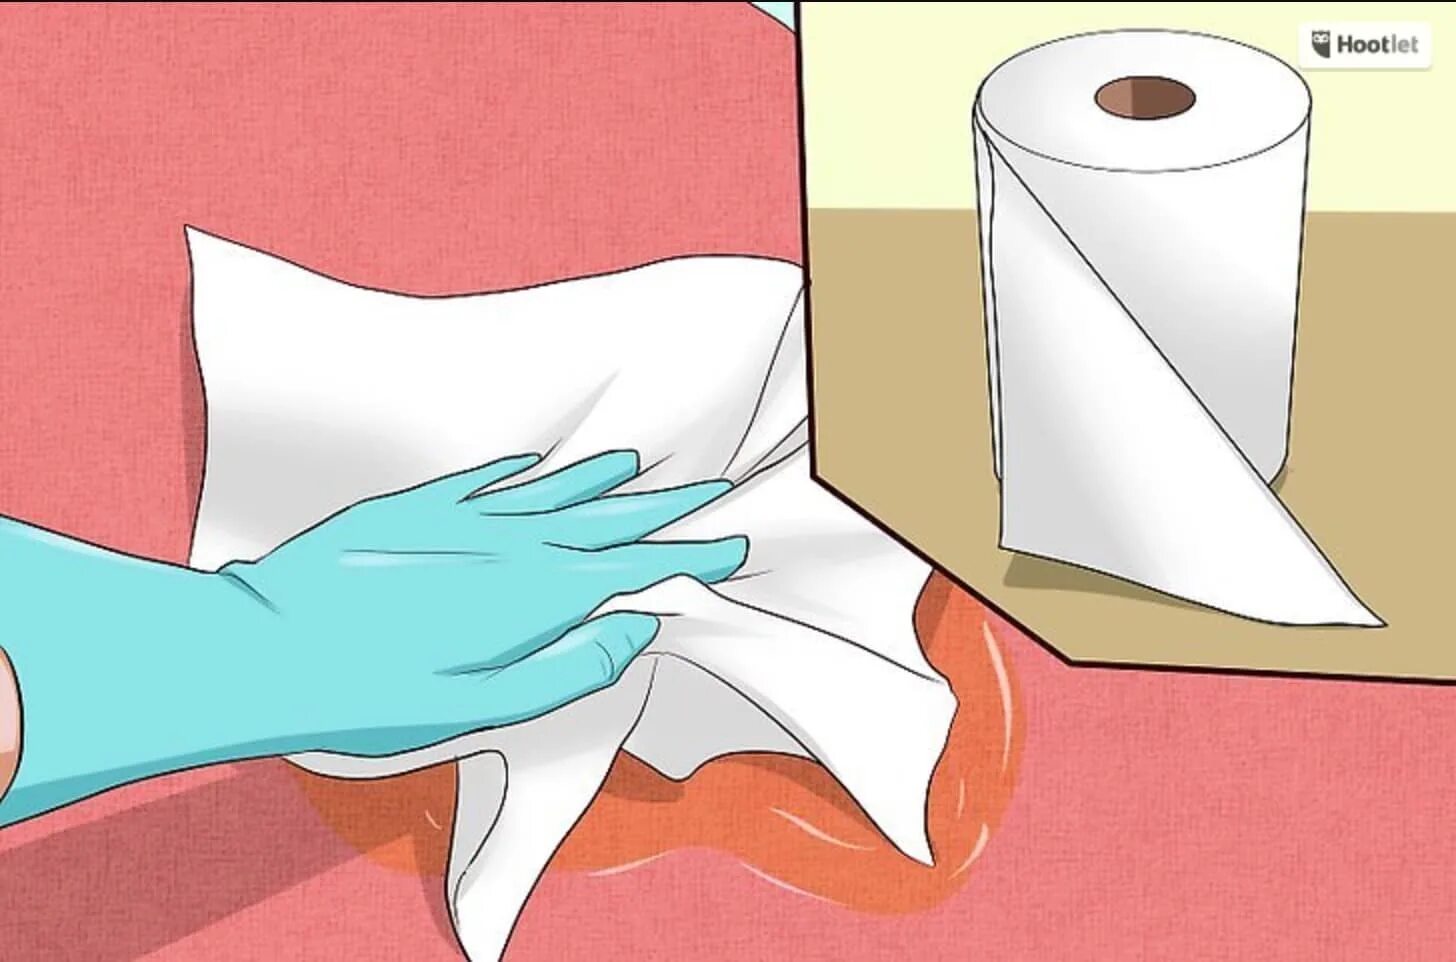 Неприятный запах от полотенца. Вытираем пятна бумажными полотенцами. Smell от запахов кошачьей мочи. Неси салфетки. Воняют полотенца